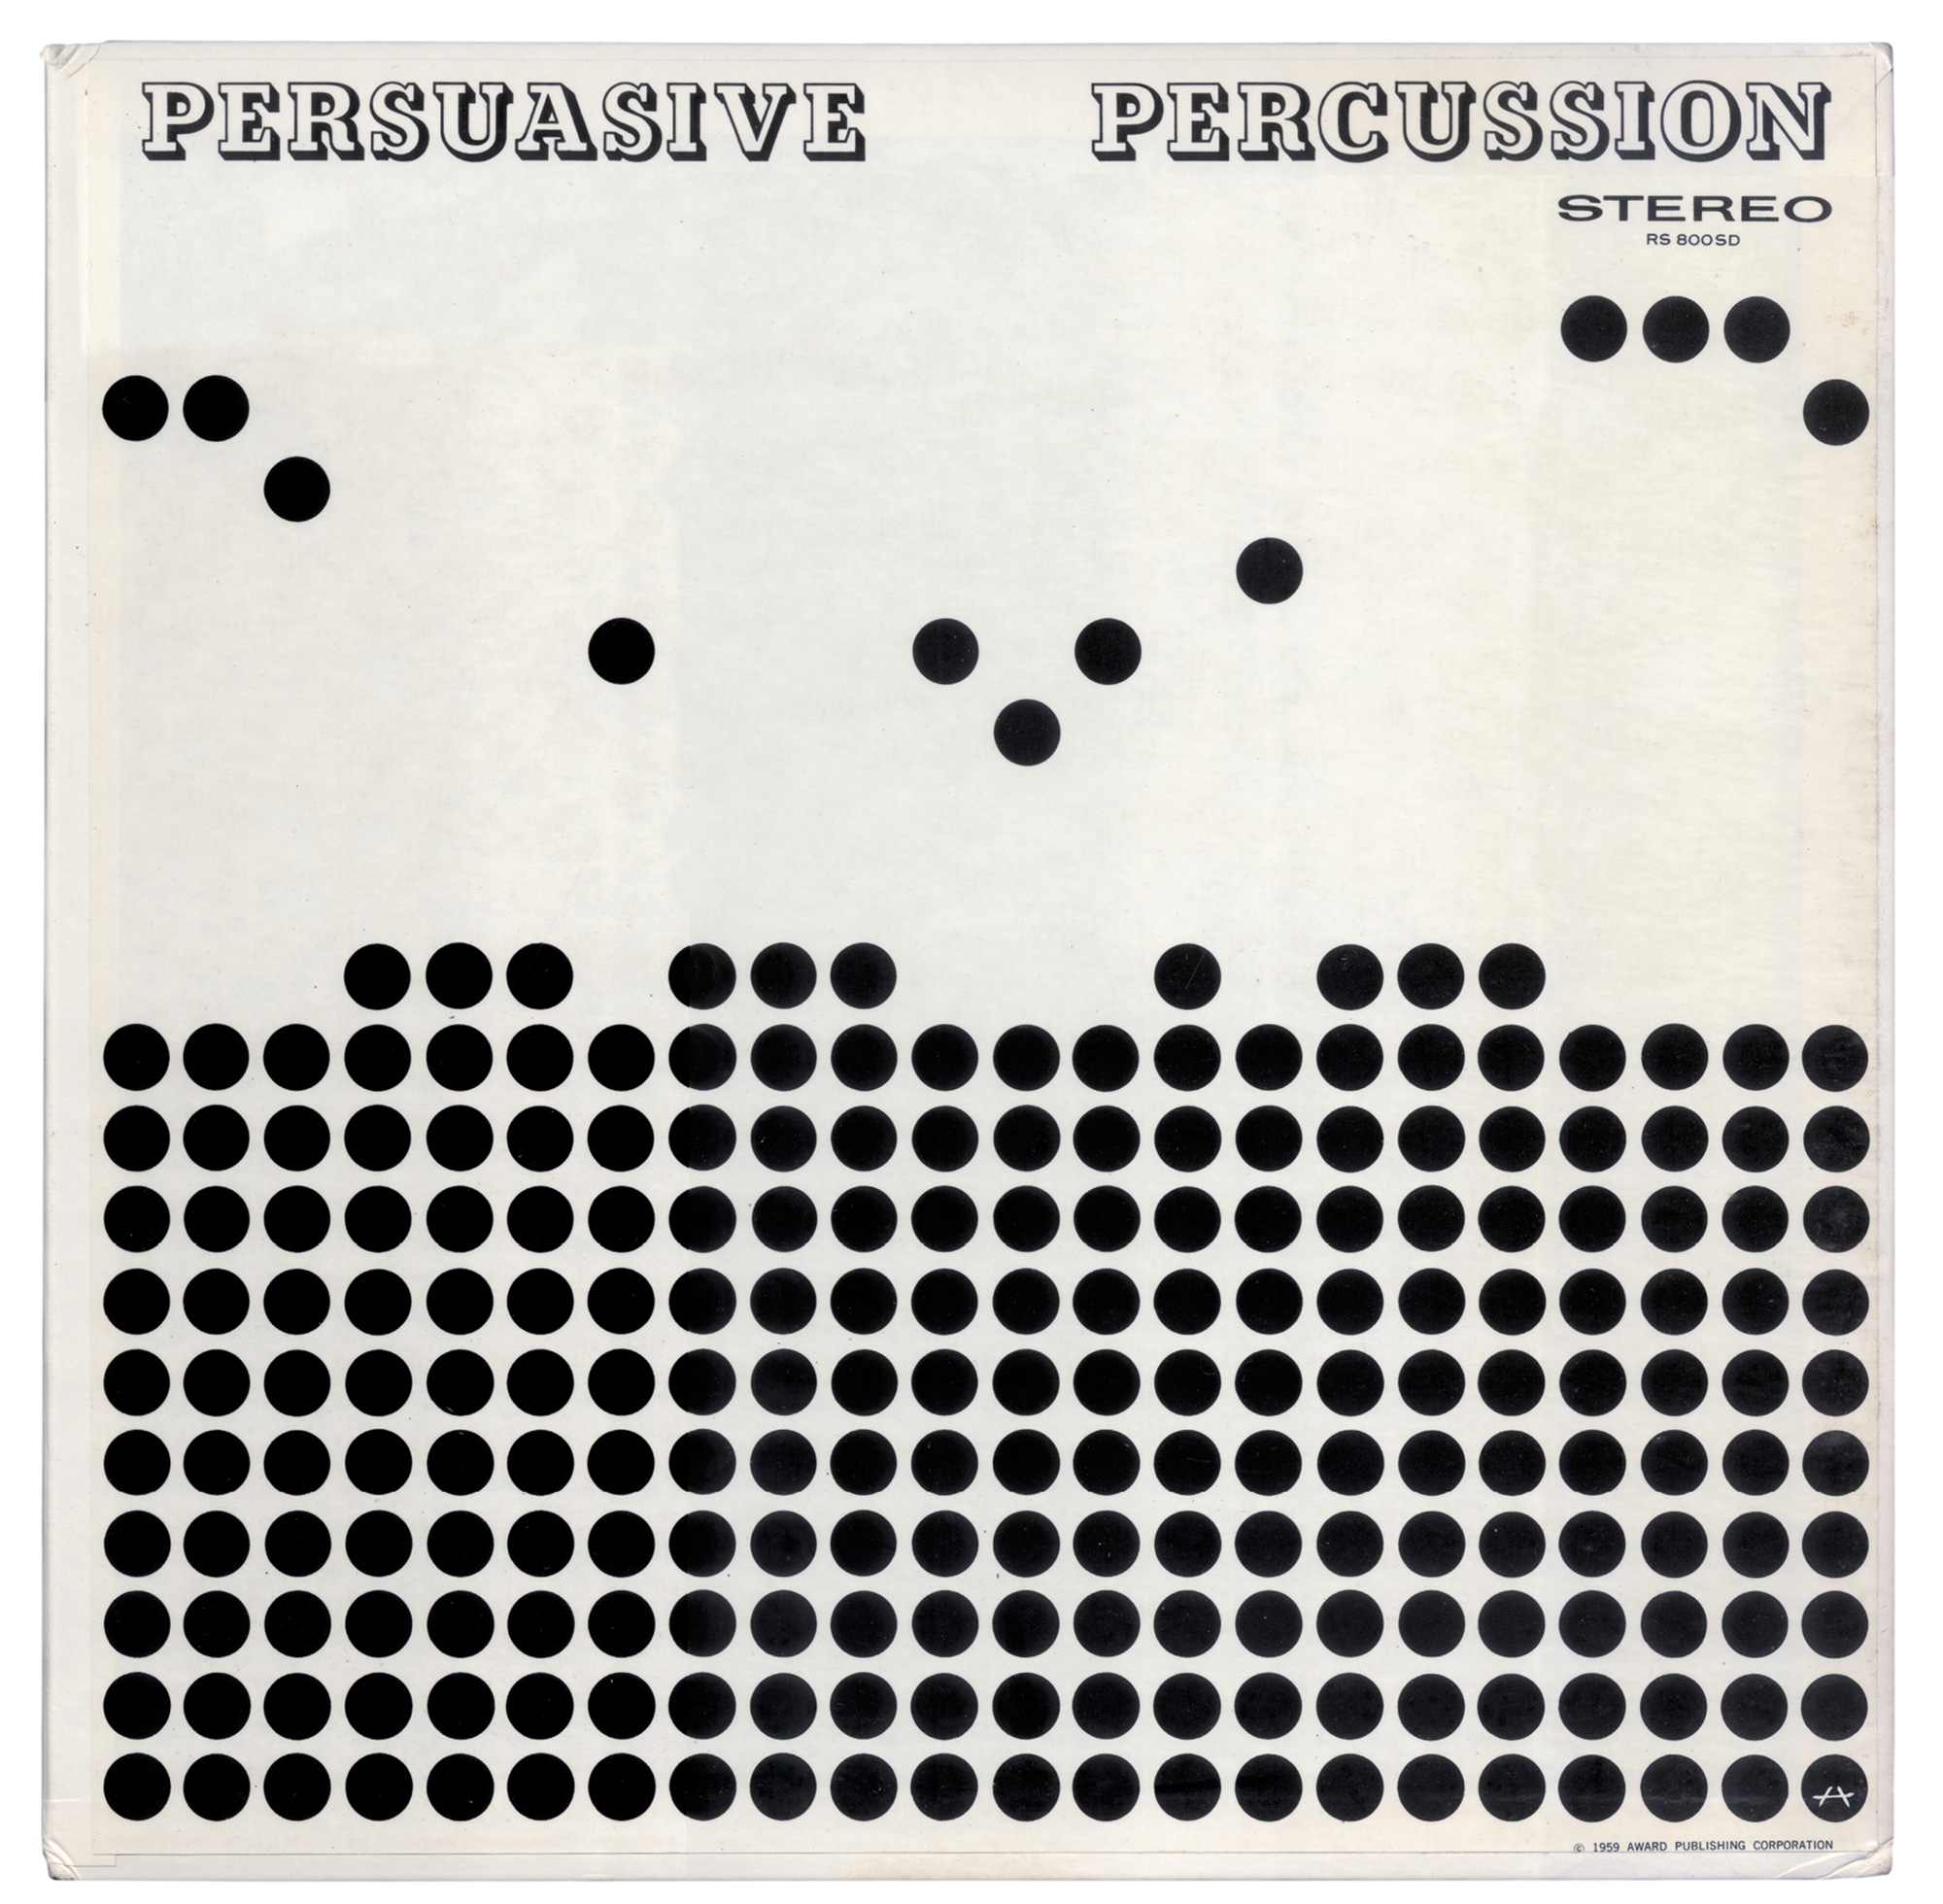 Album cover designed by Josef Albers for the 1959 album “Persuasive Percussion.” 